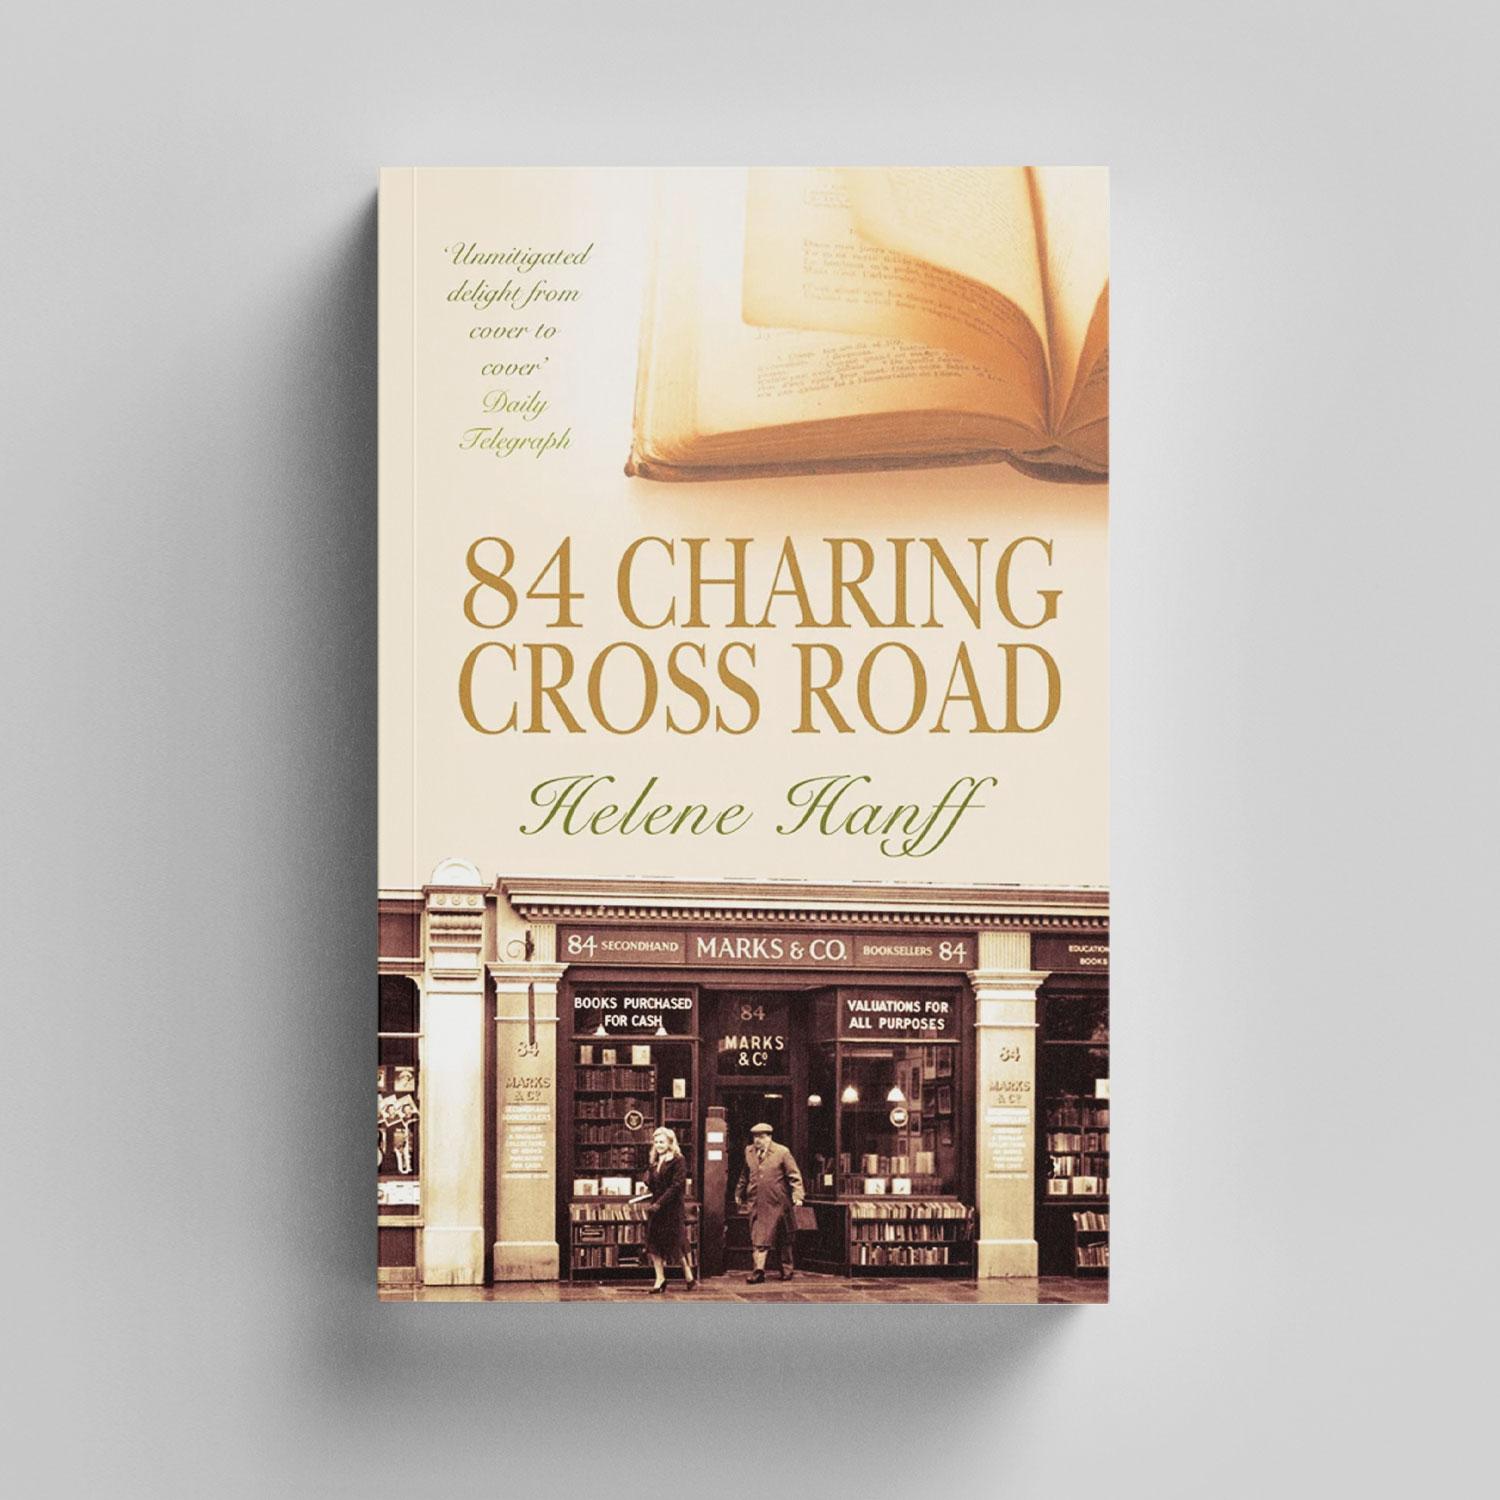 84 Charing Cross Road by Helen Hanuff